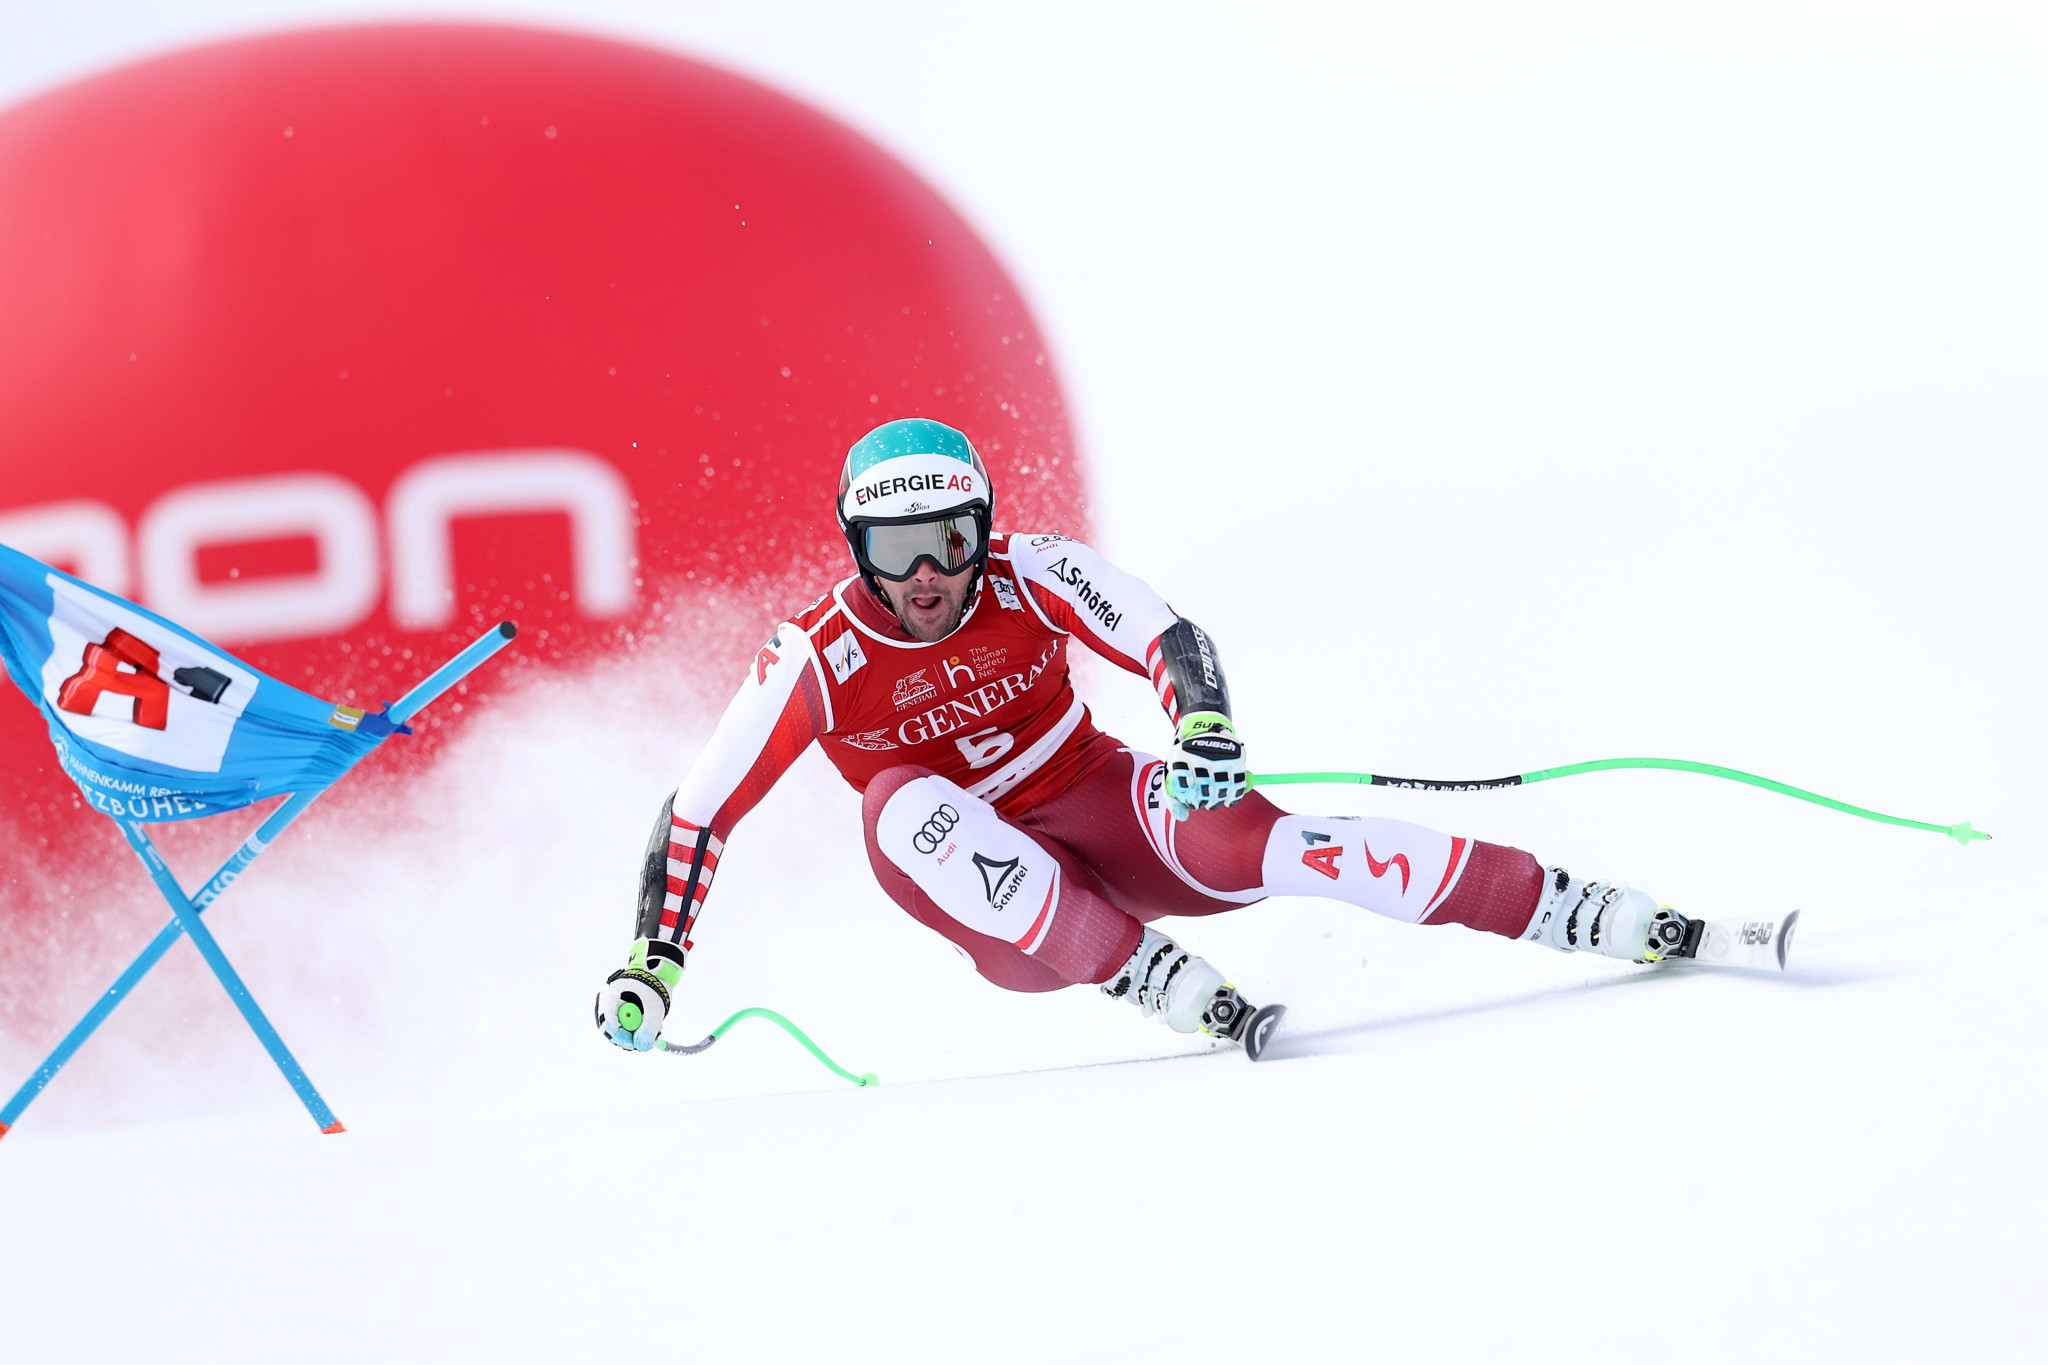 Kriechmayr earns first win of FIS Alpine Skiing World Cup season in Kitzbühel